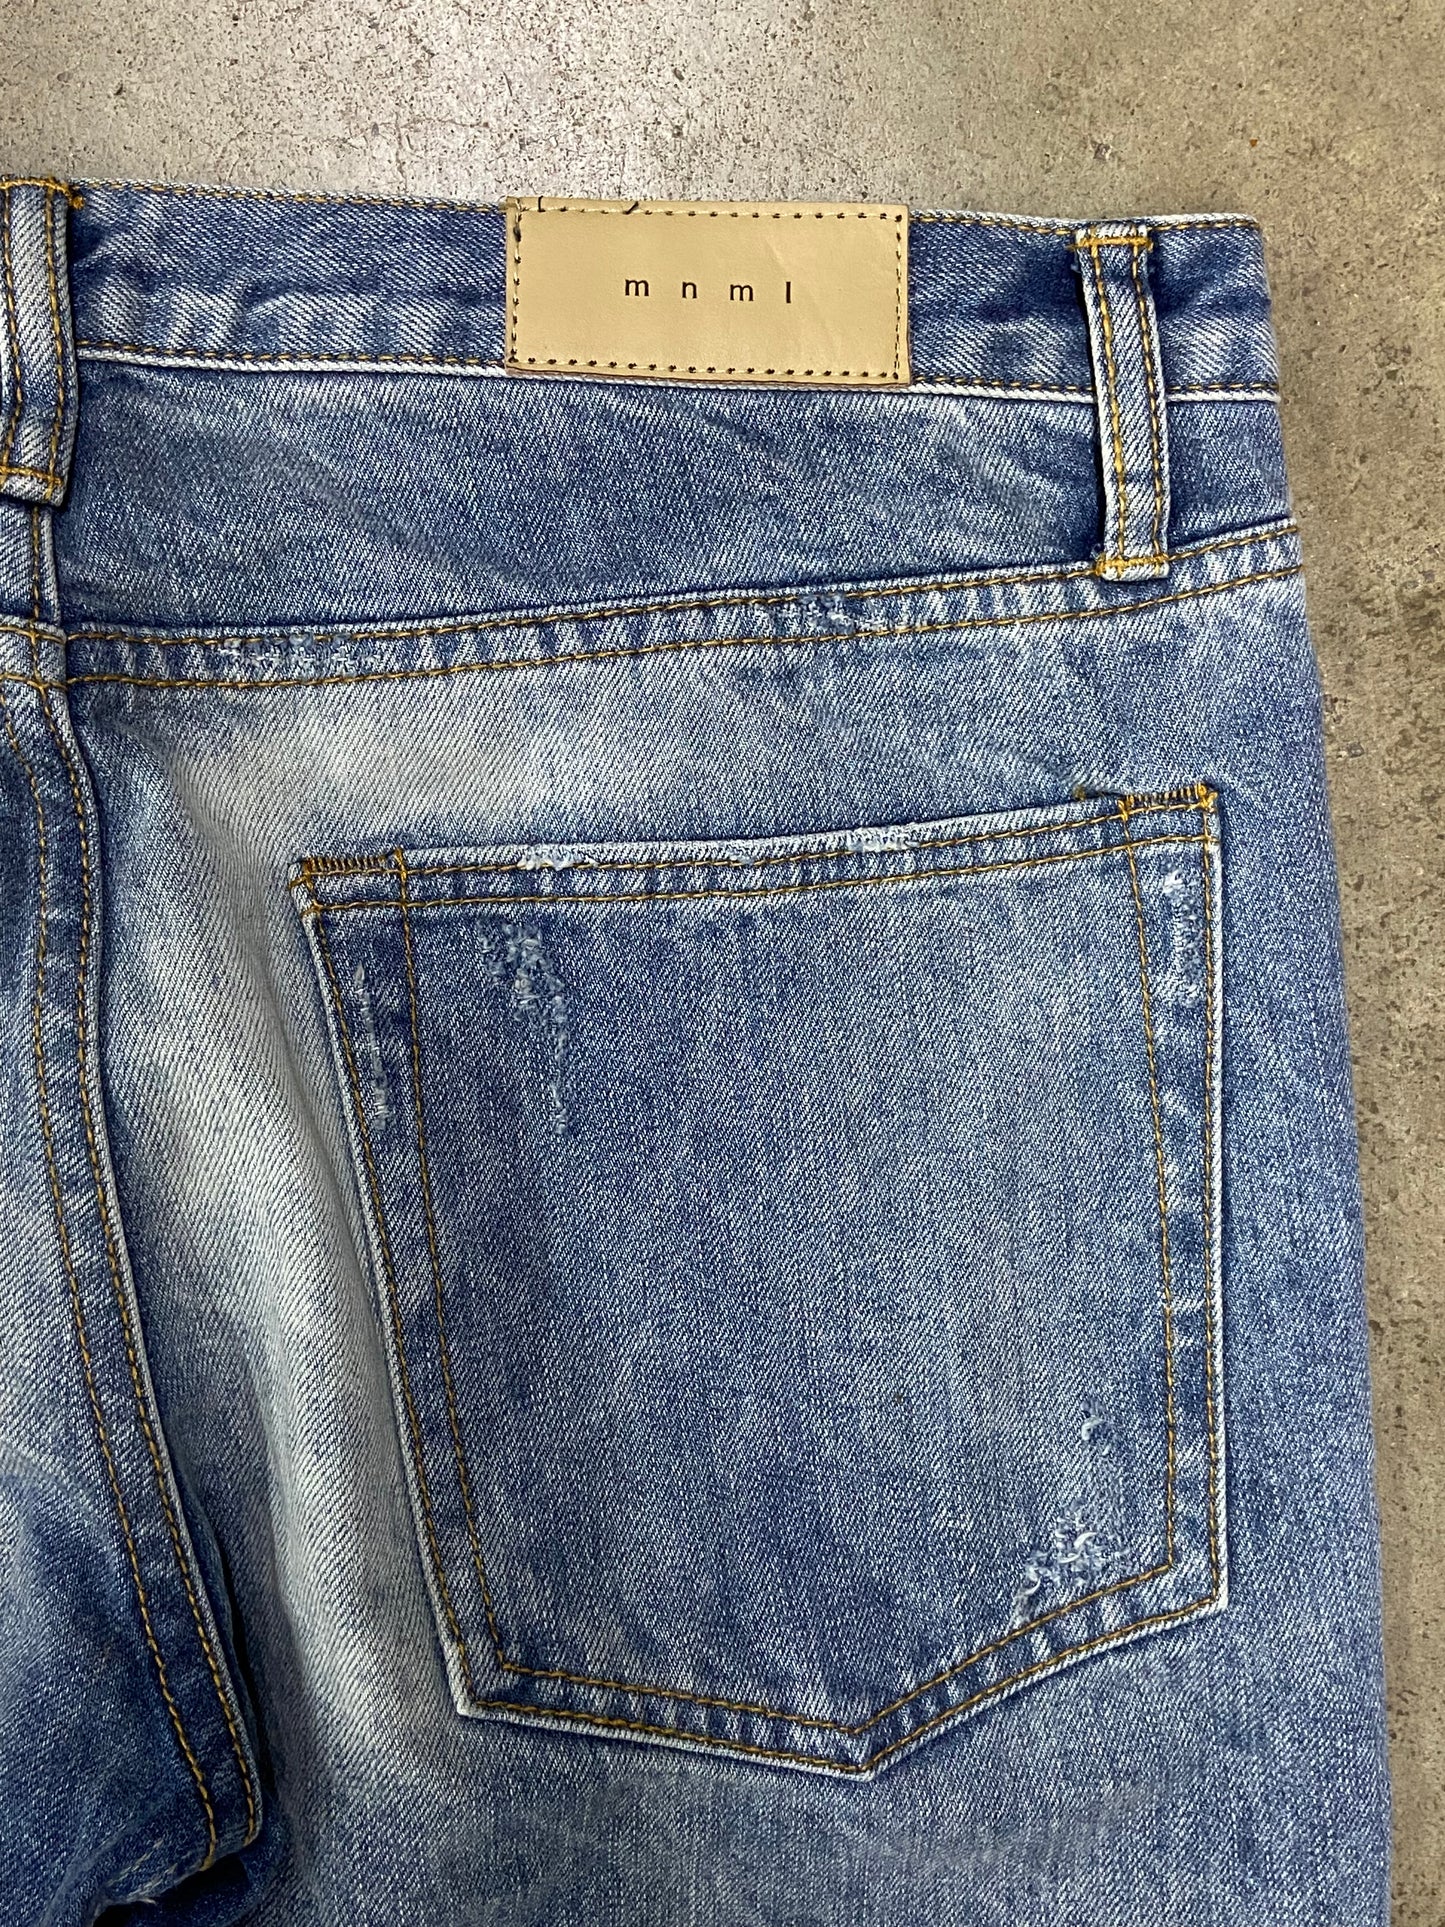 Preowned MNML Blue Denim Distressed Tapered Jeans Sz 36x33